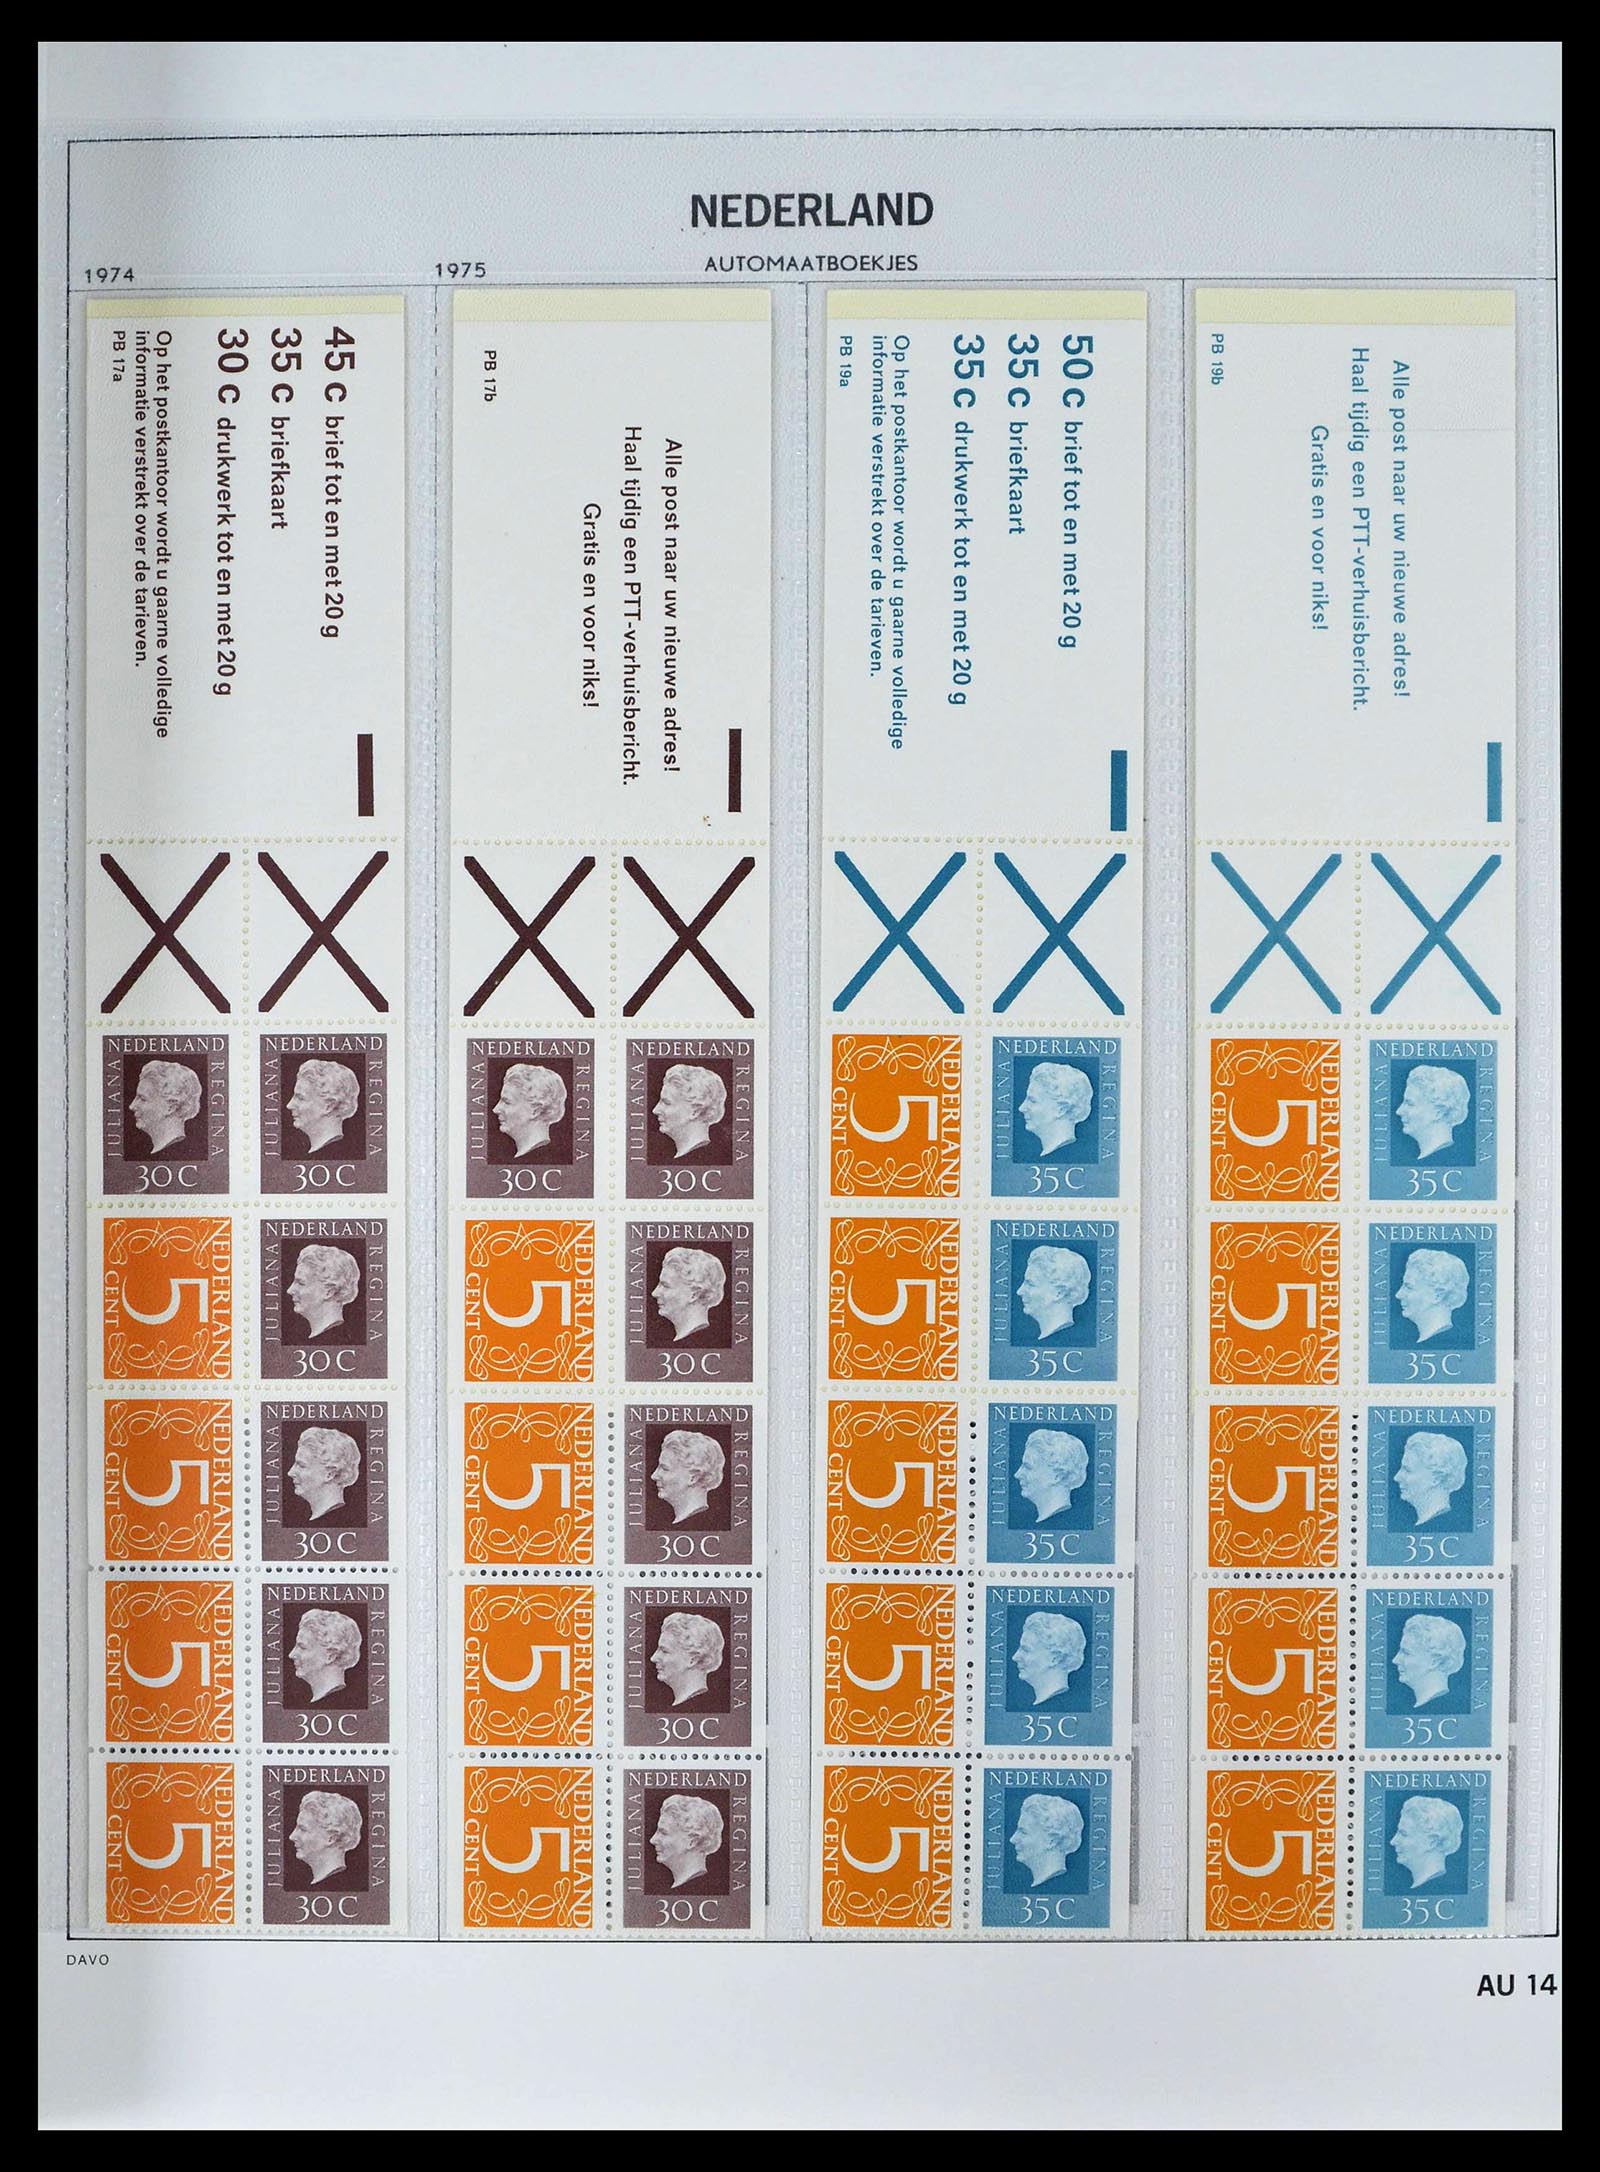 39362 0014 - Stamp collection 39362 Netherlands stamp booklets 1964-2003.